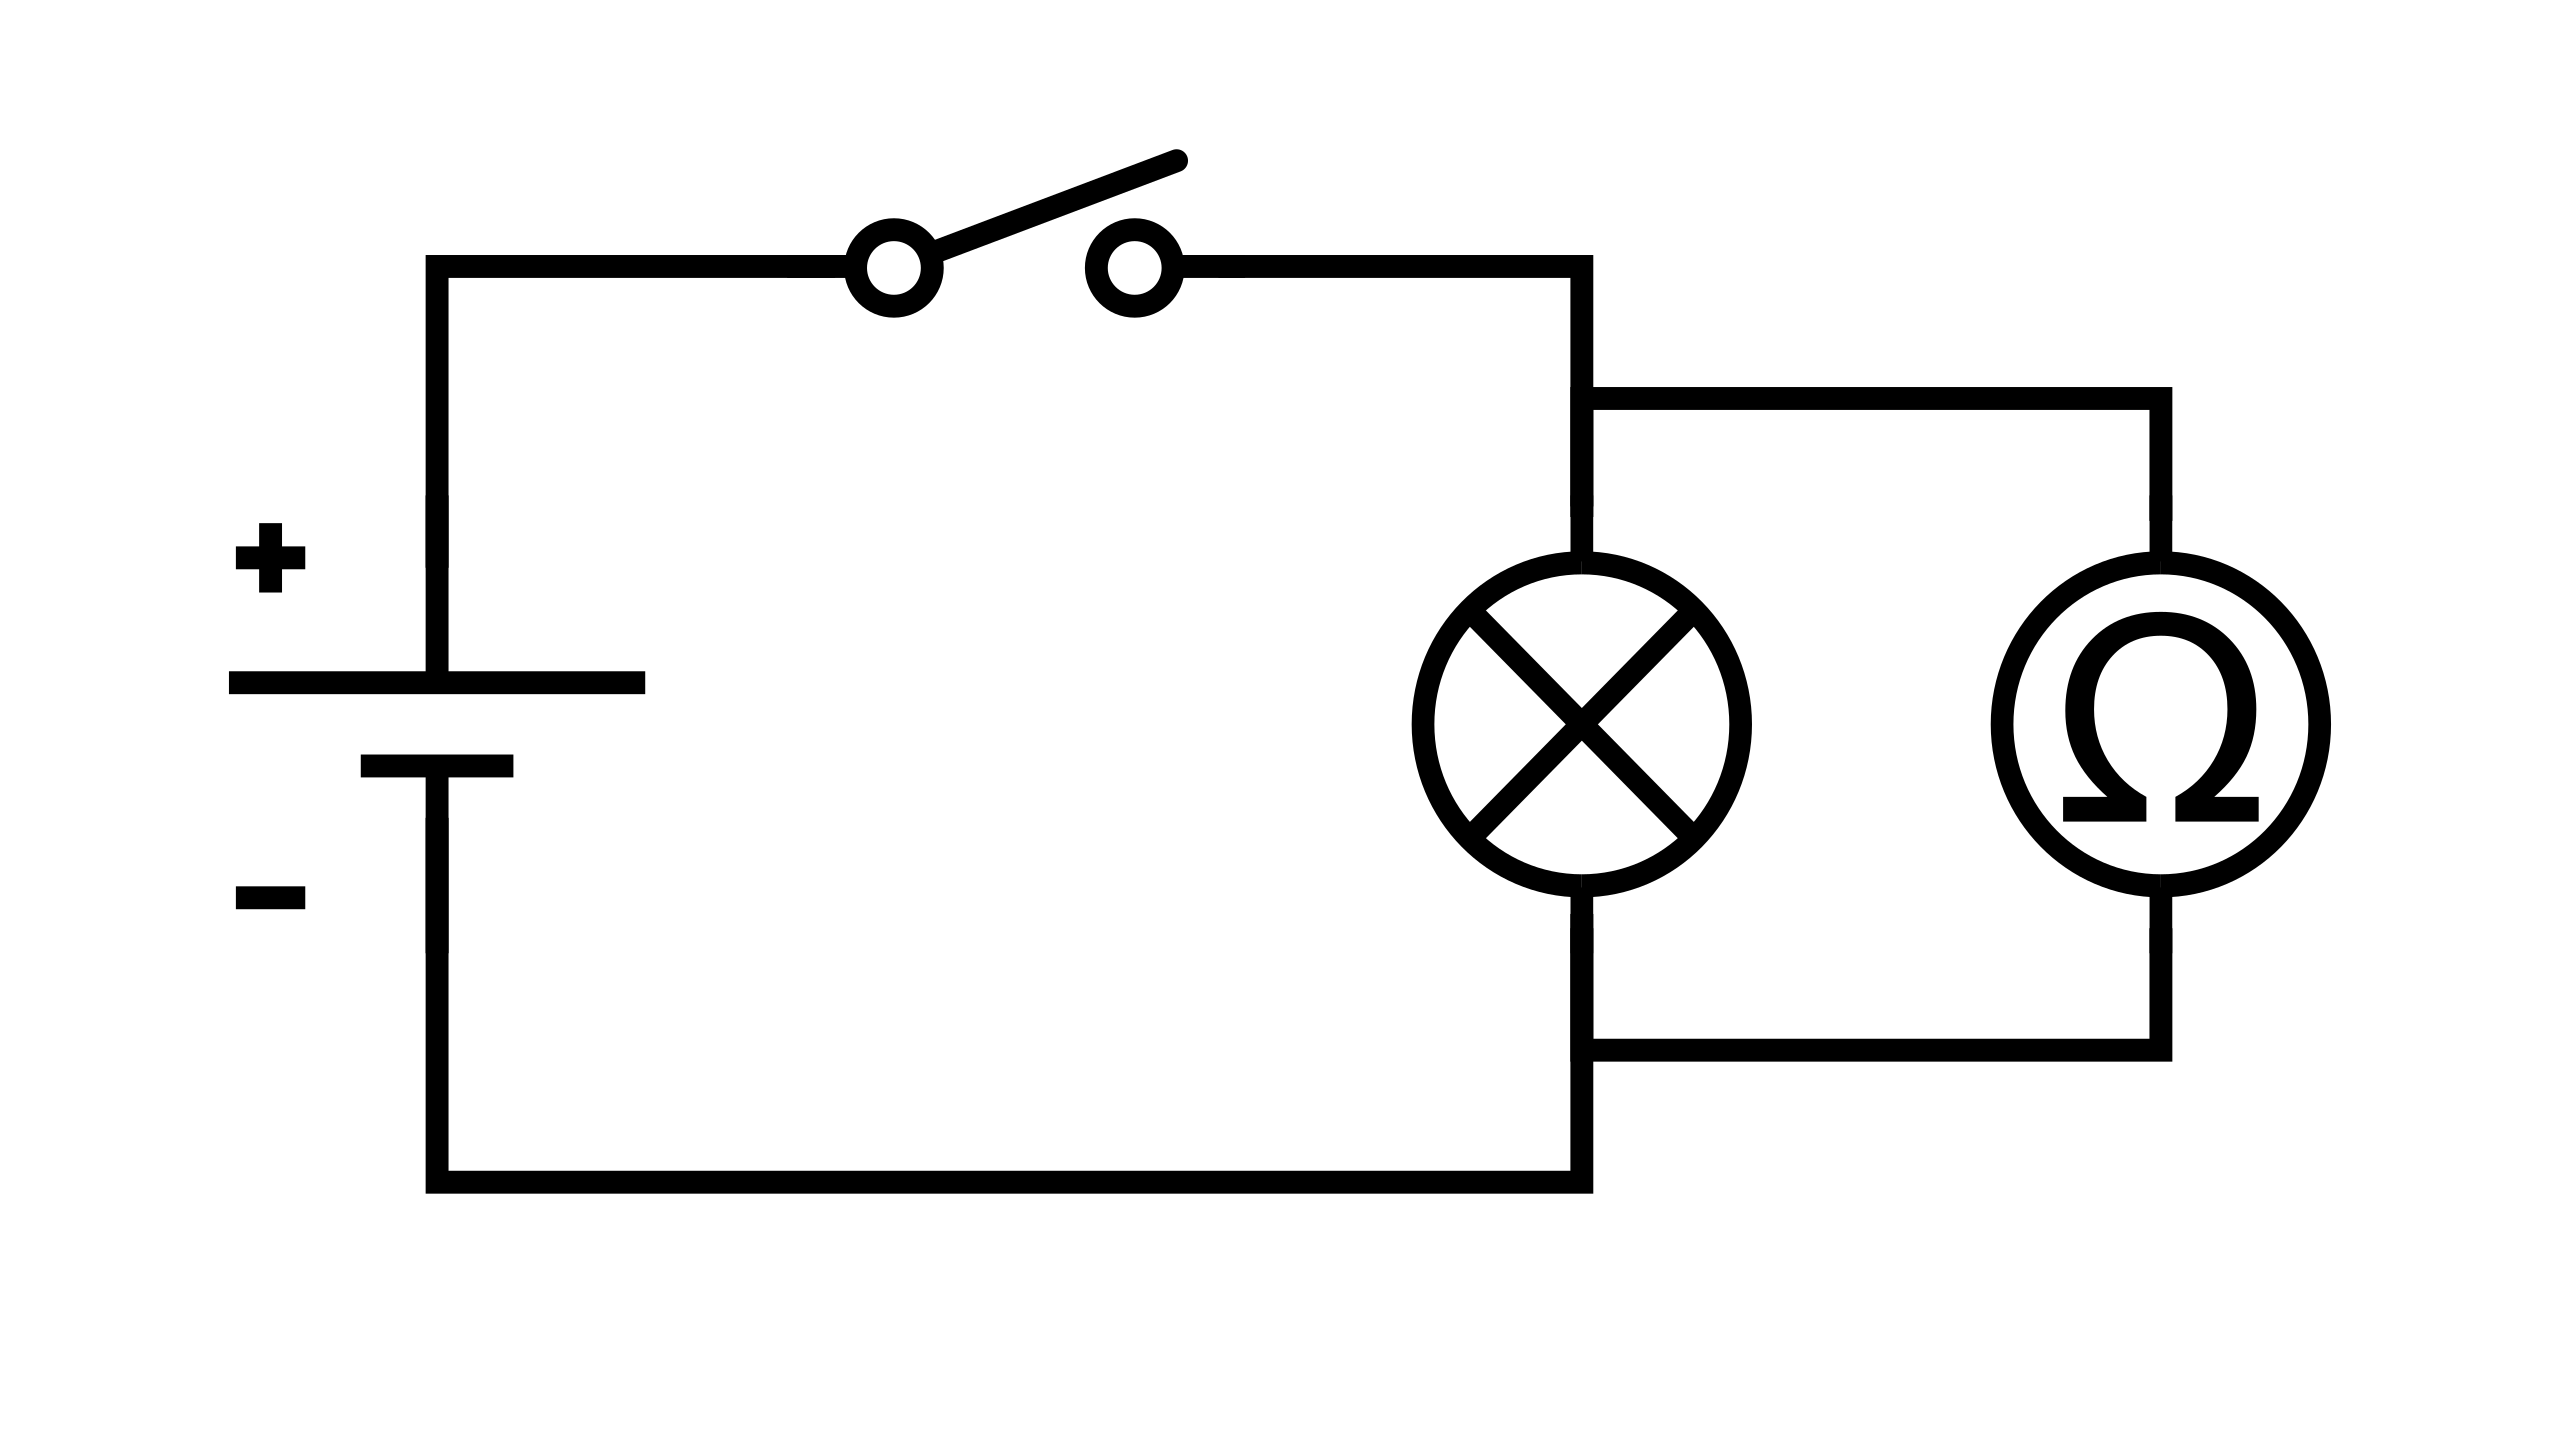 Simple circuit 